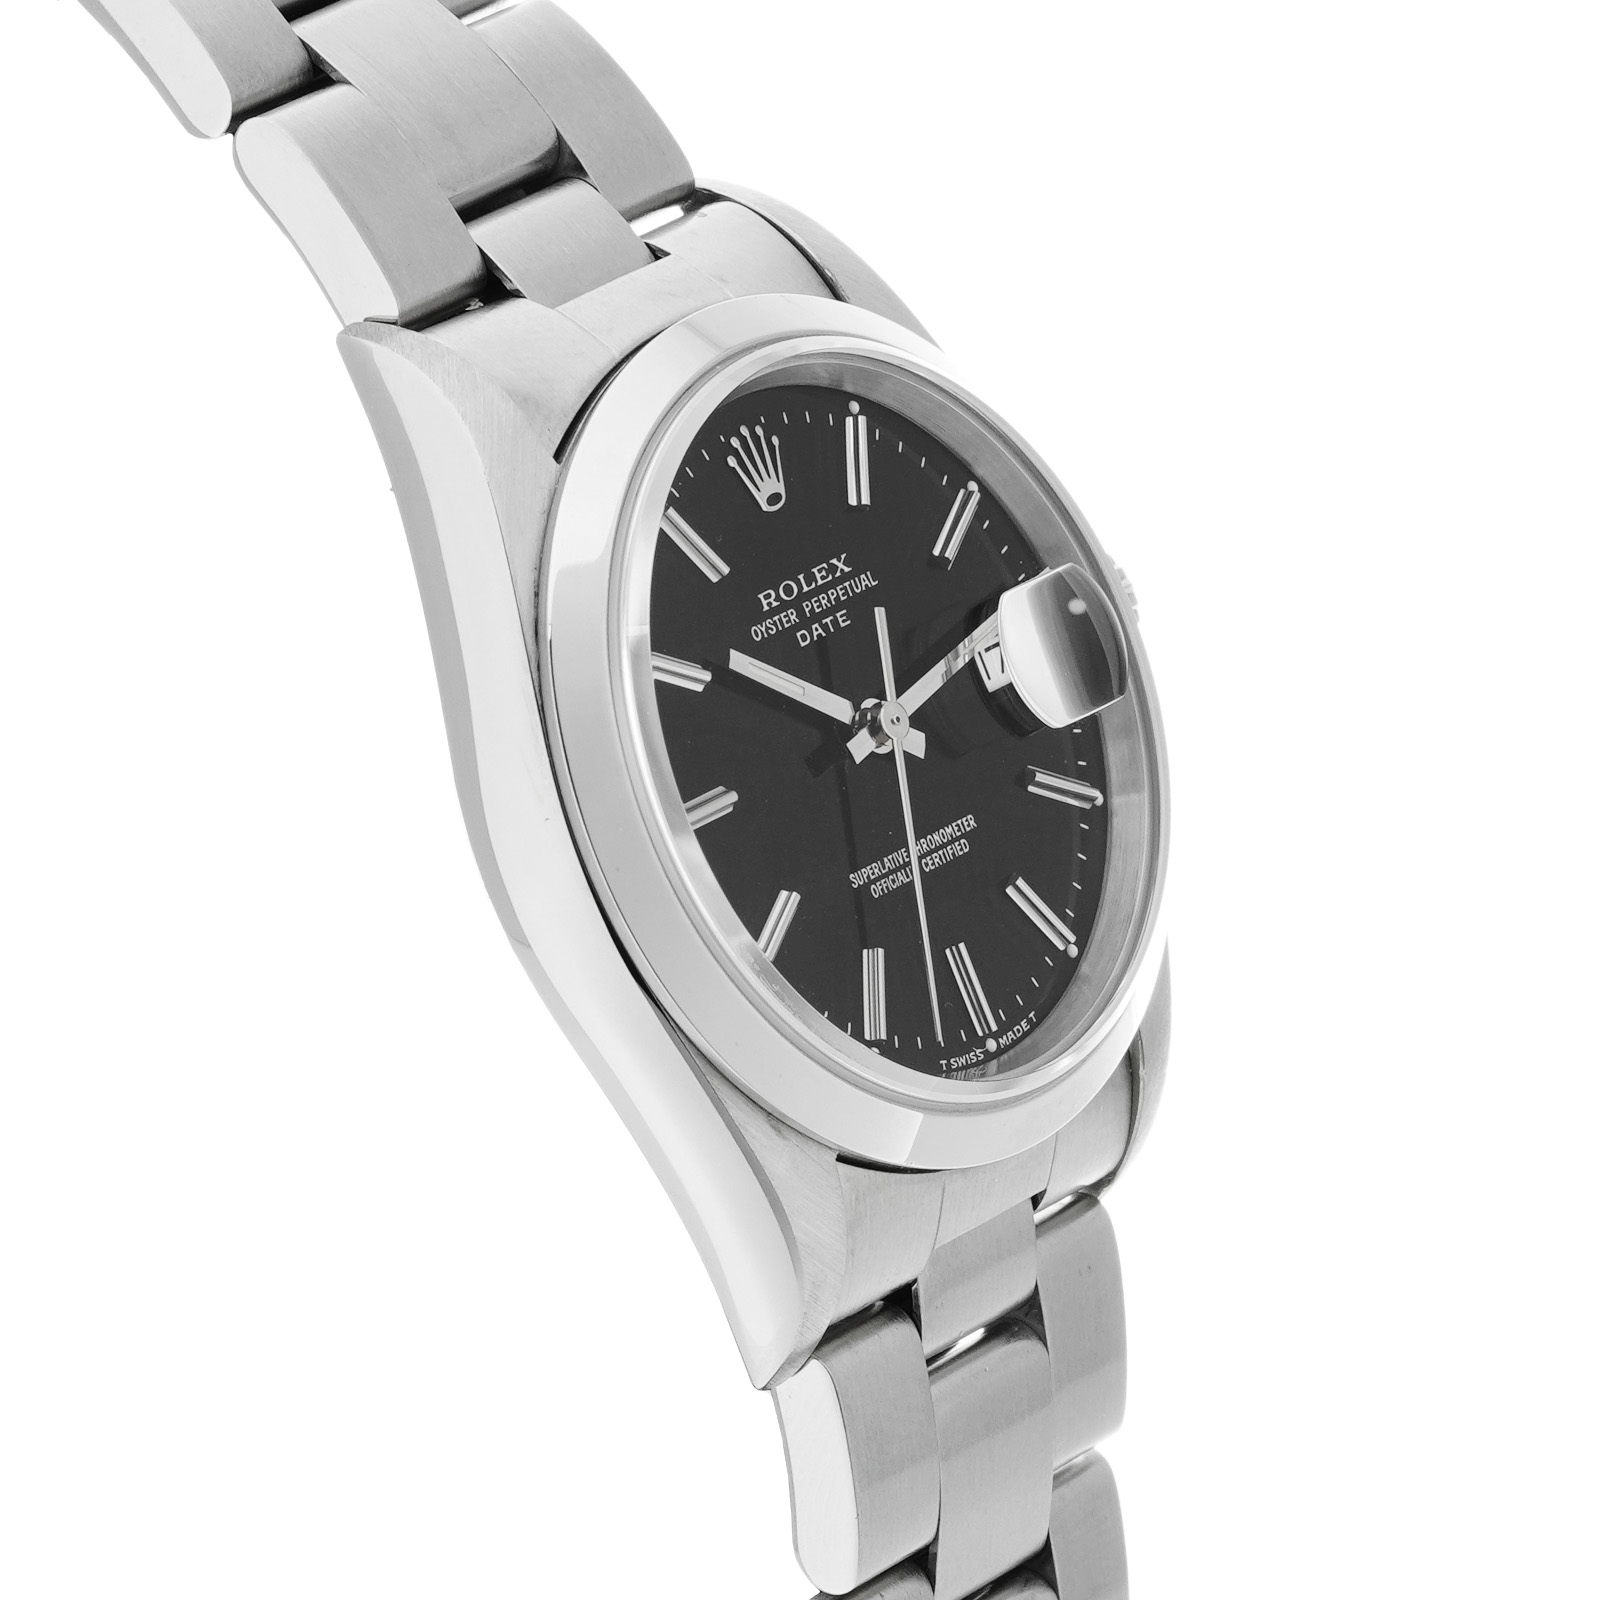 ROLEX(ロレックス) 腕時計 15200 メンズ 黒